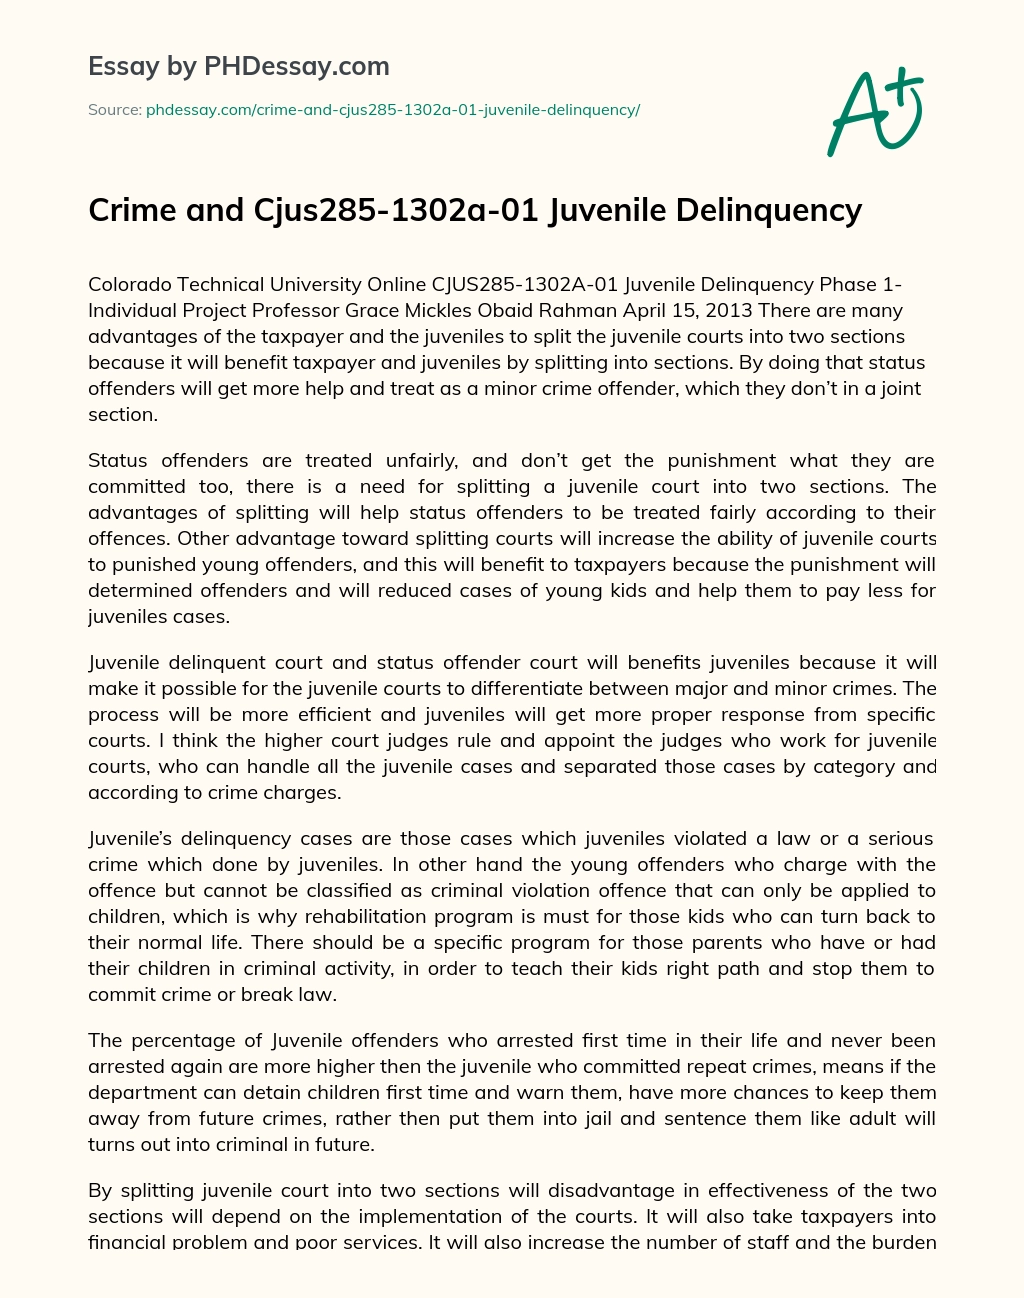 Crime and Cjus285-1302a-01 Juvenile Delinquency essay